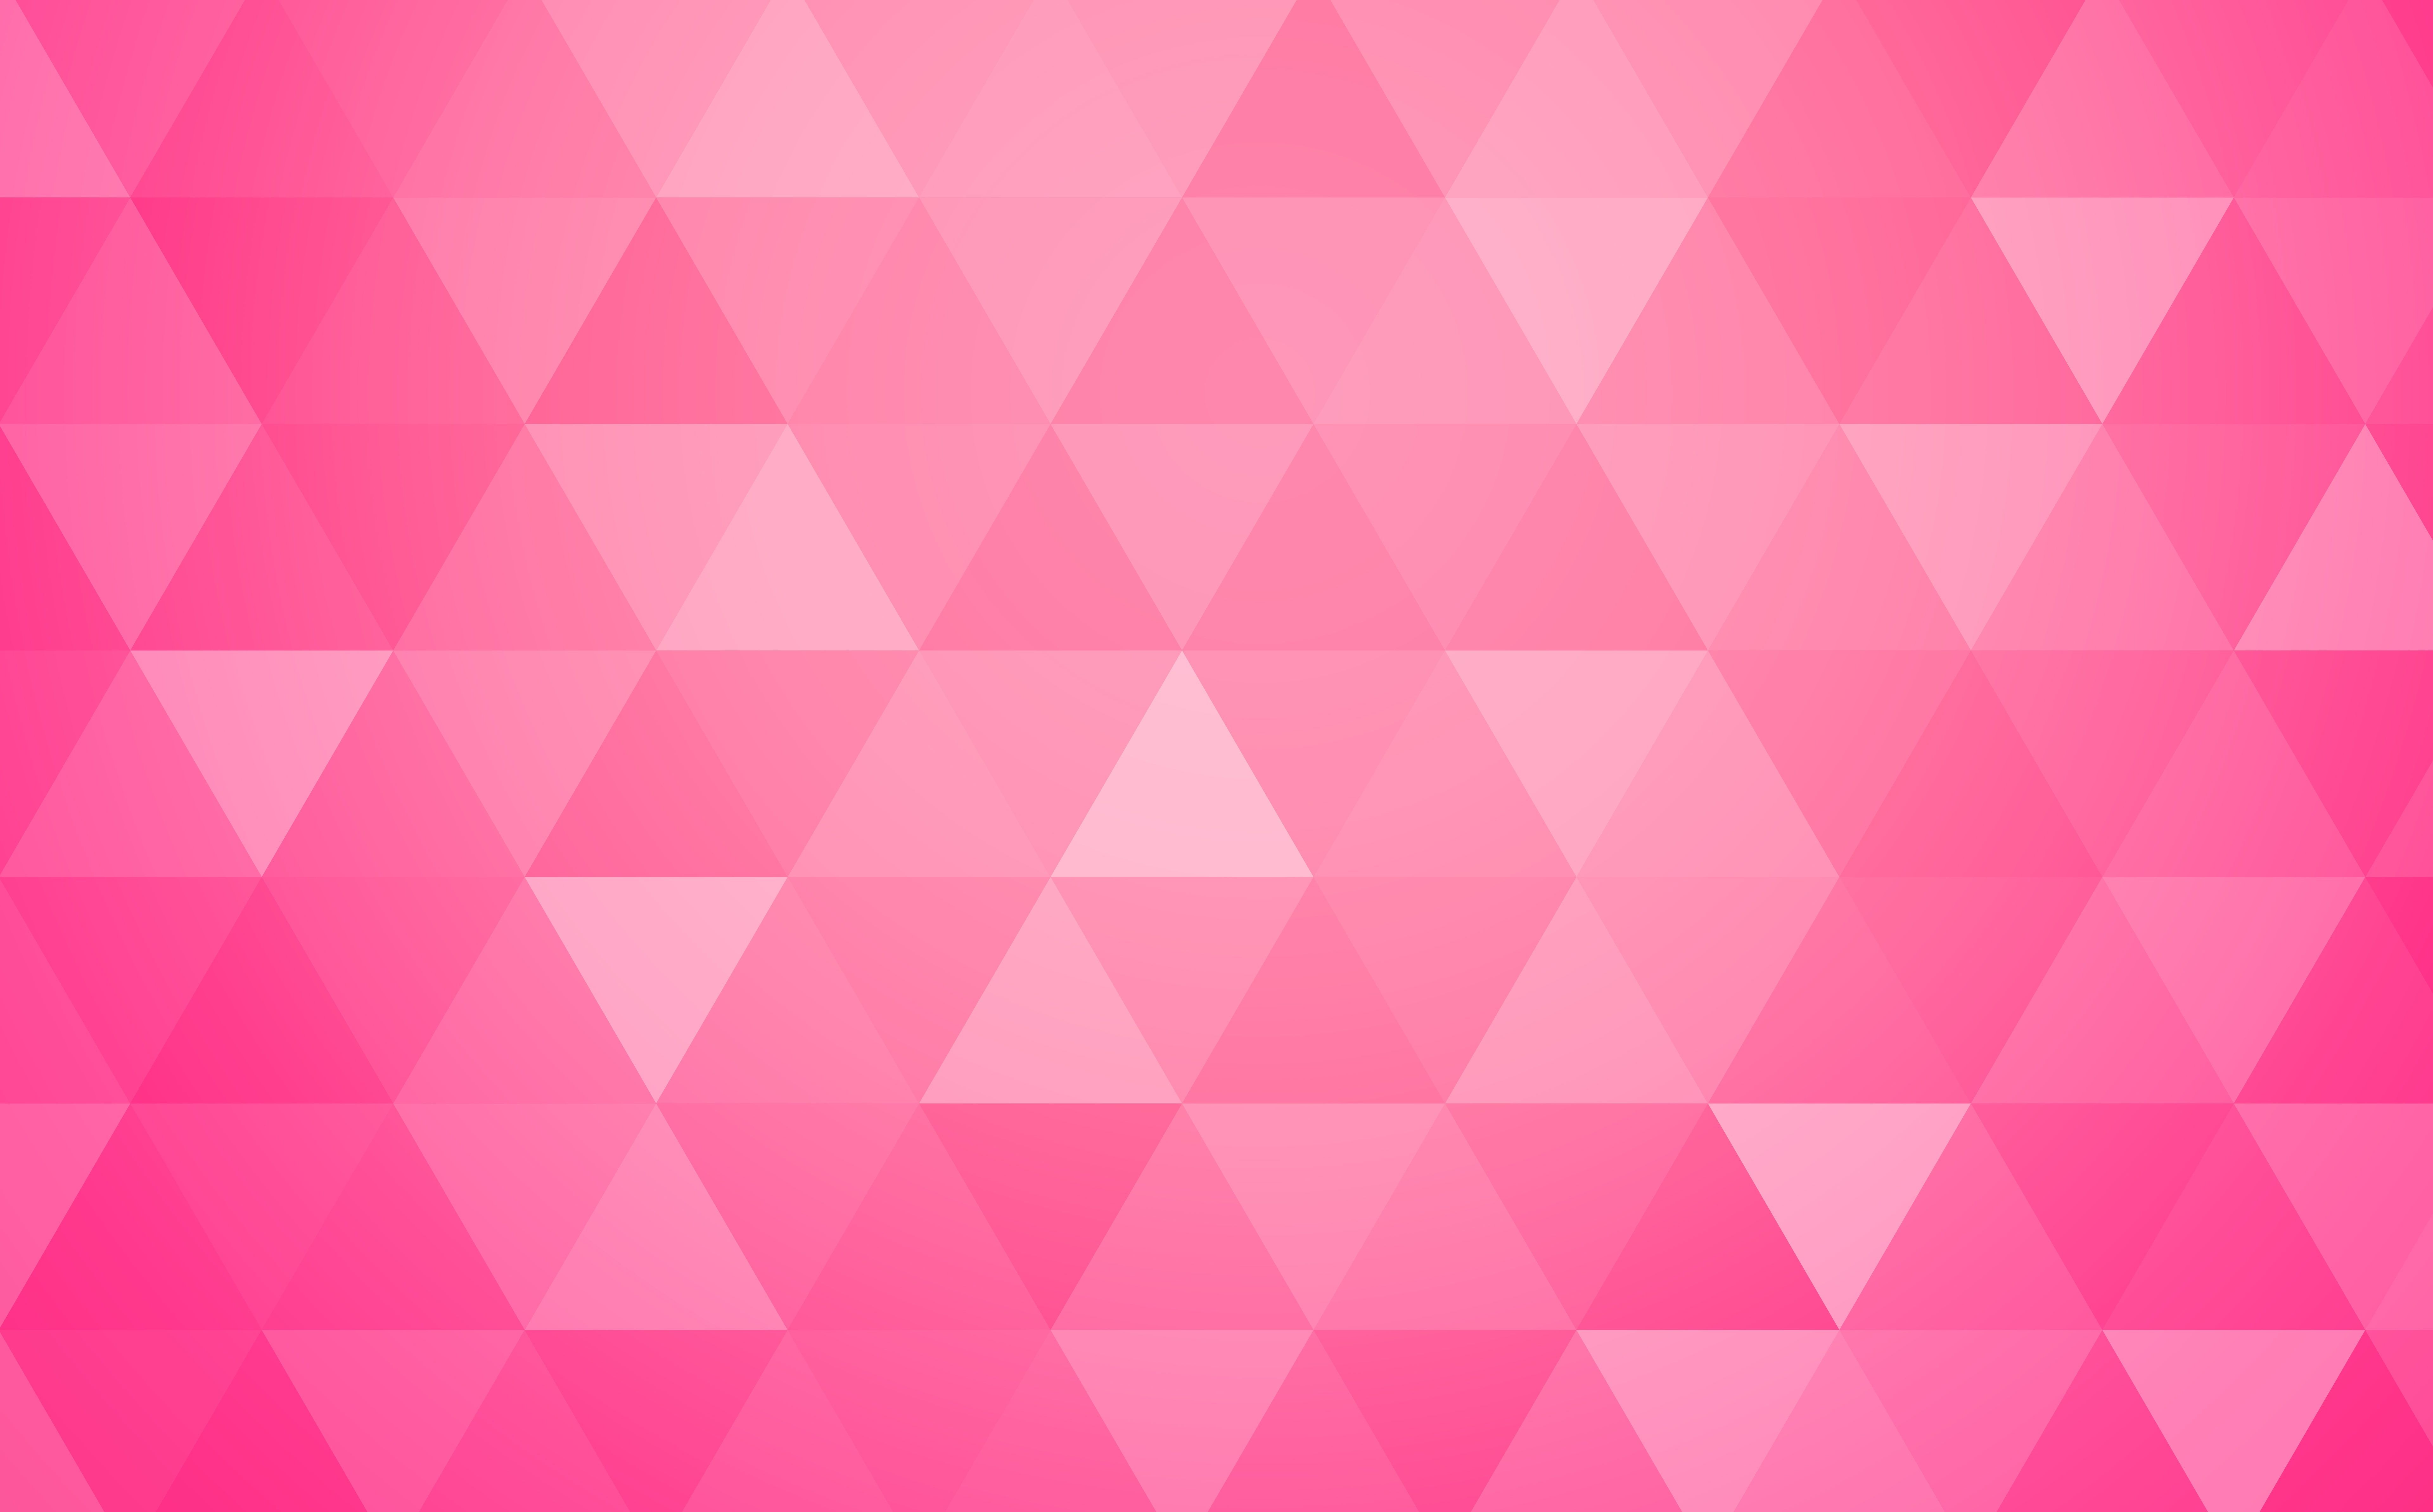 Pink Geometric Desktop Wallpapers